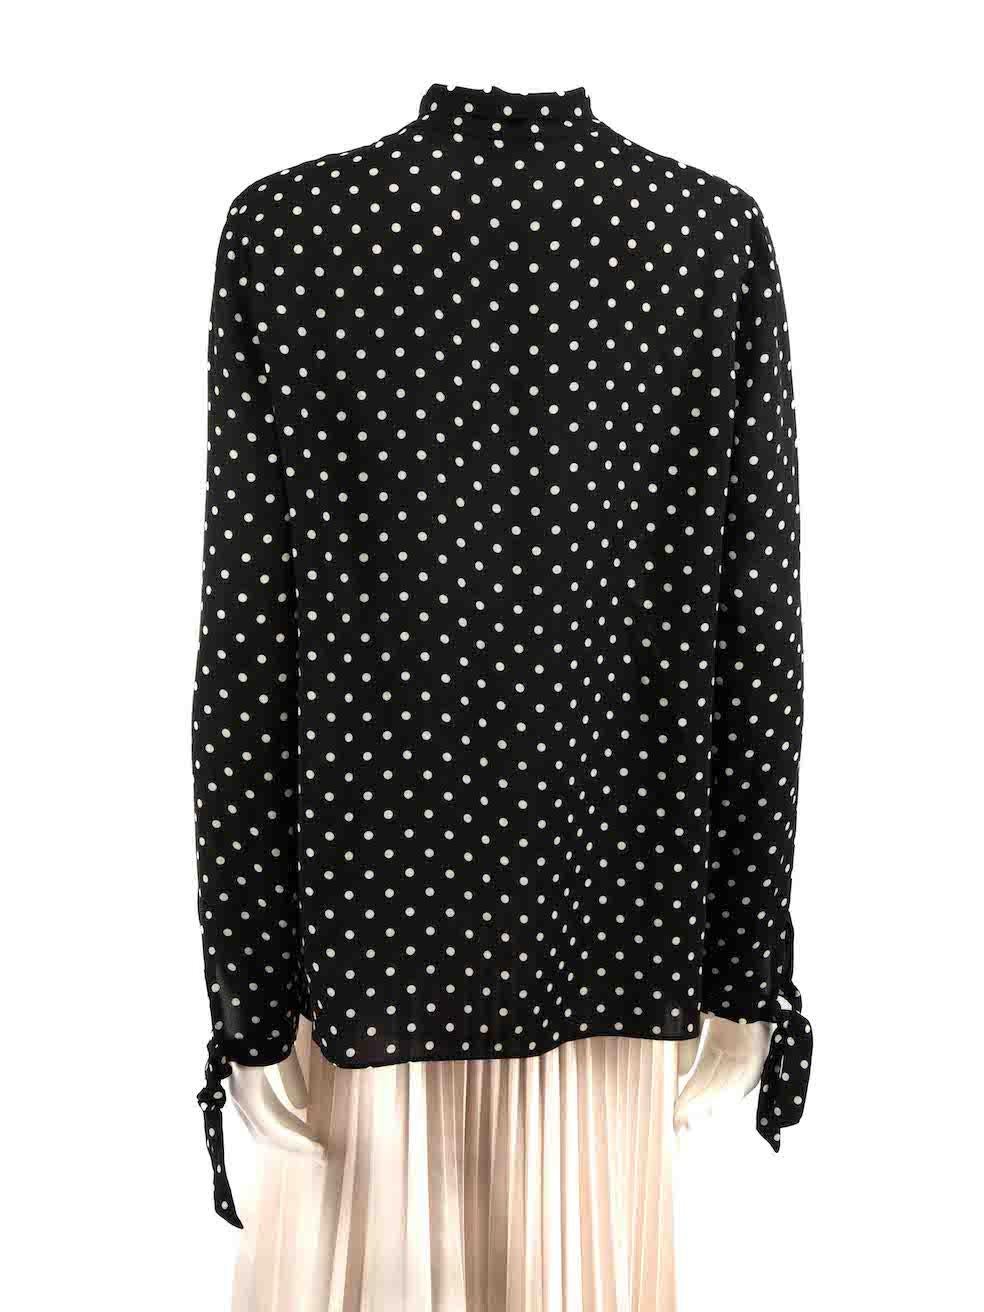 Valentino Garavani Black Silk Polka Dots Blouse Size XL In Good Condition For Sale In London, GB